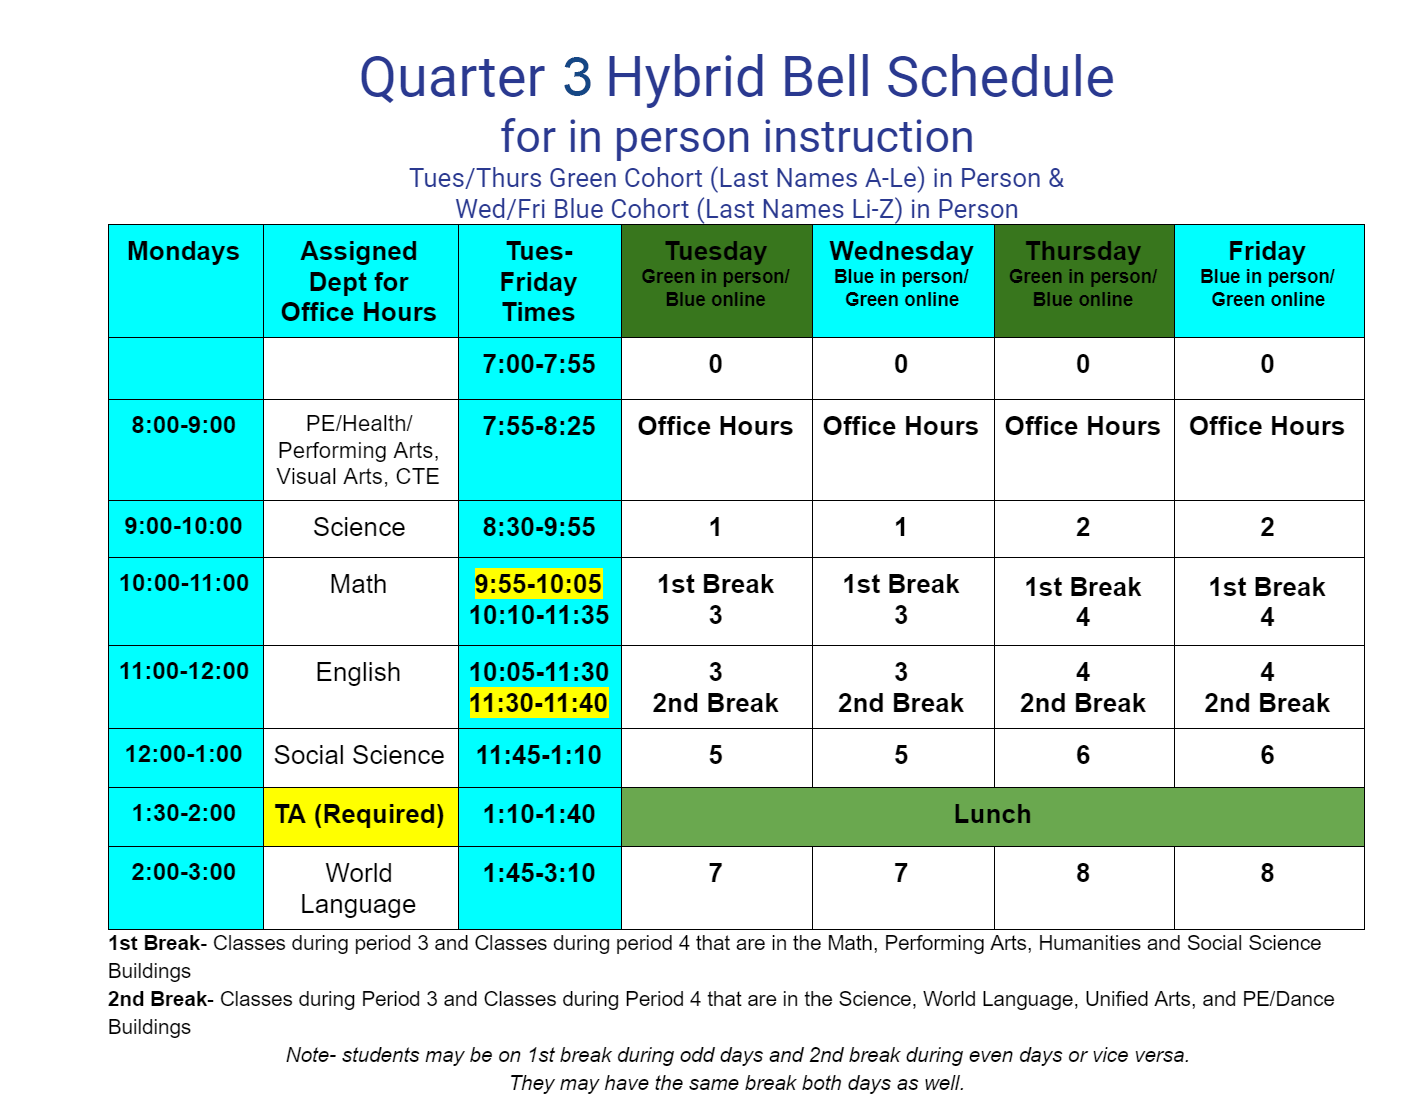 Q3 Regular Schedule